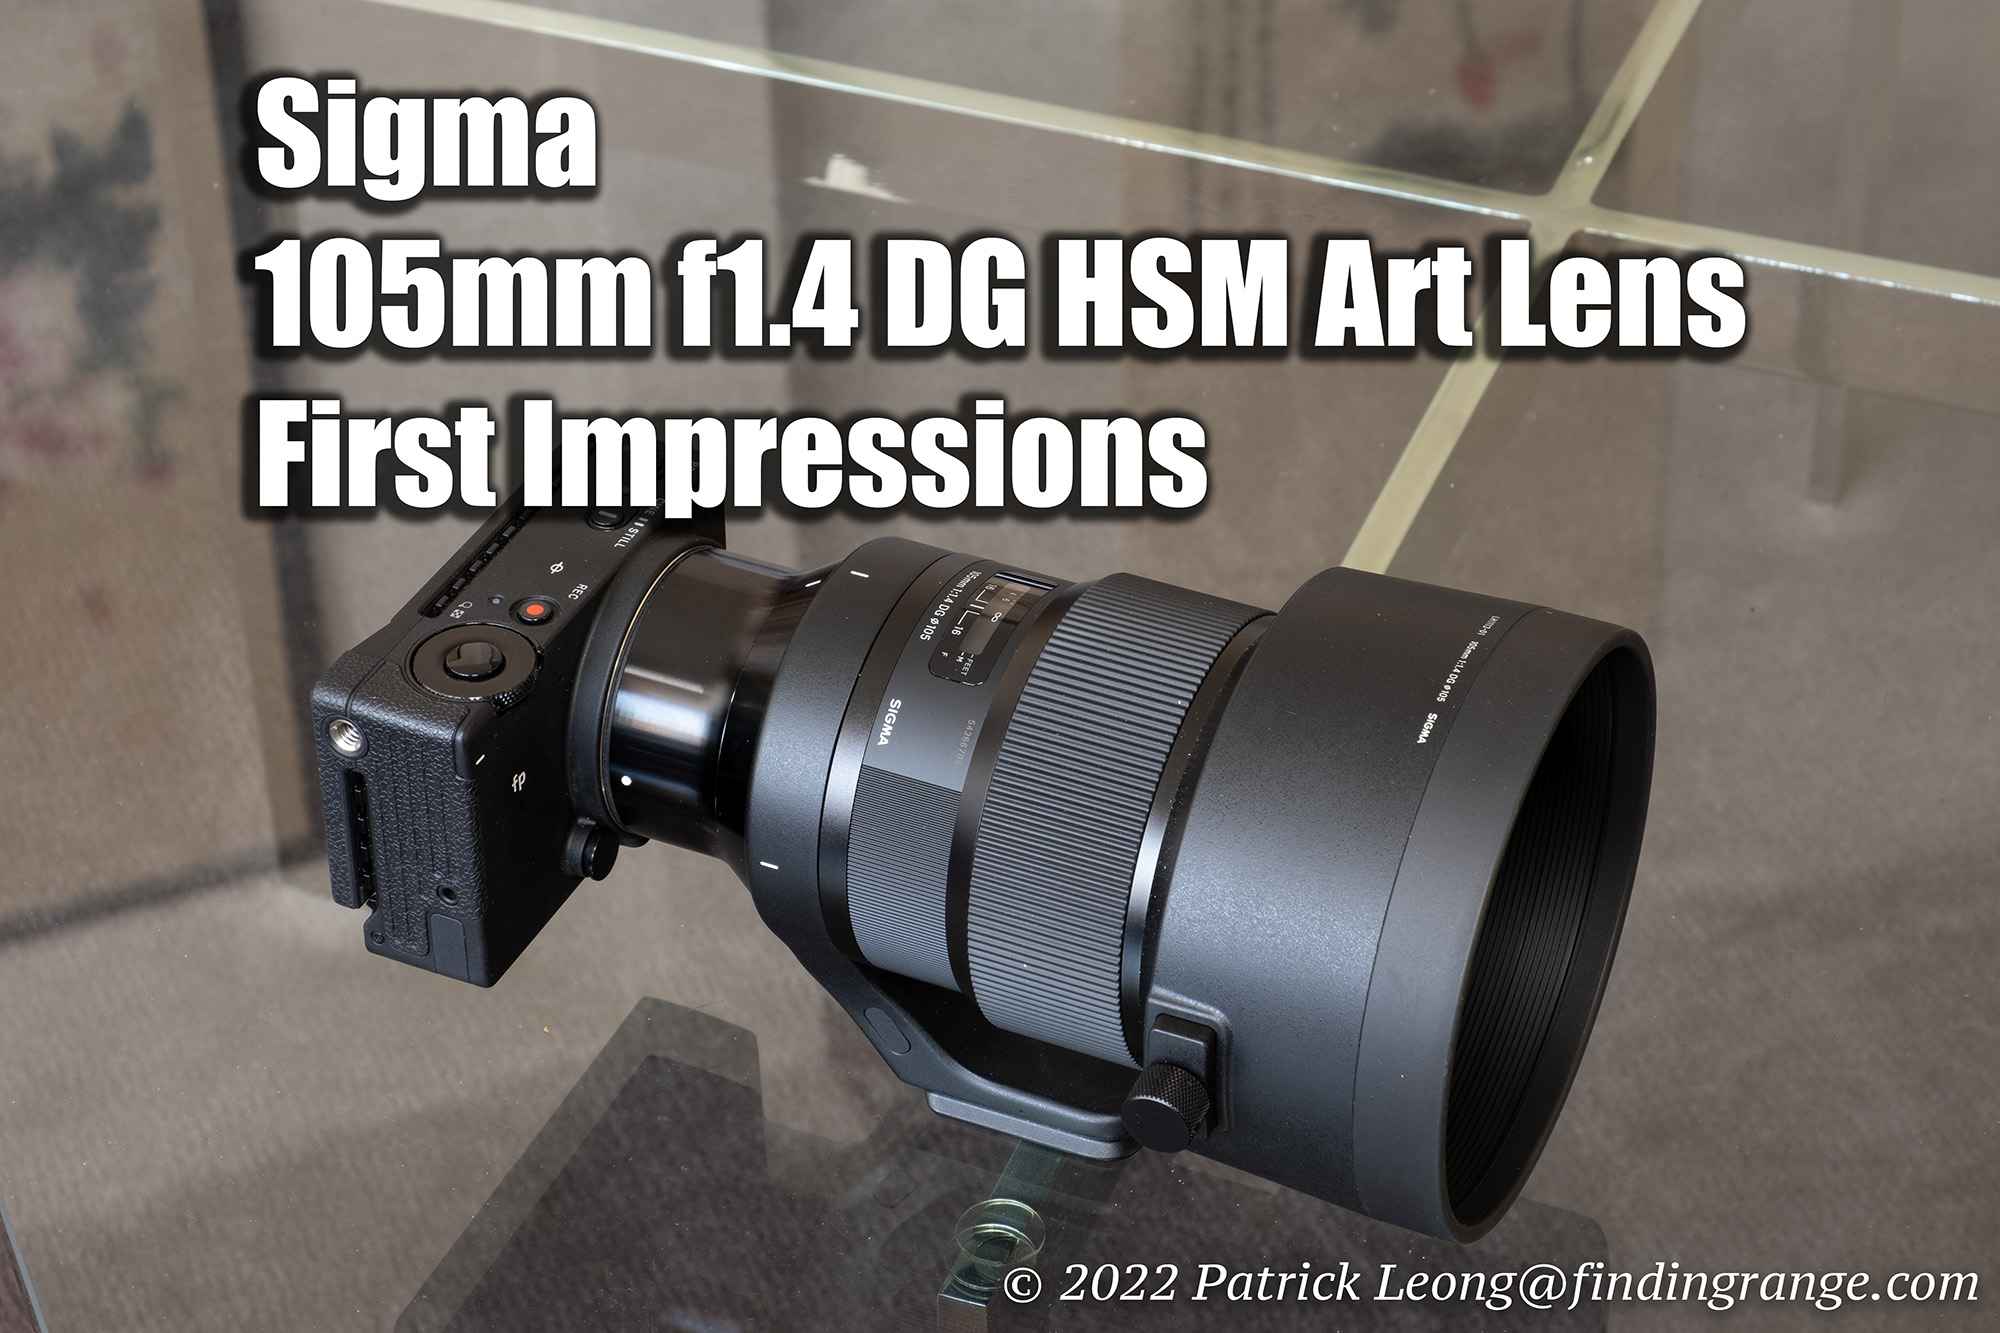 Sigma 105mm f1.4 DG HSM Art Lens First Impressions - Finding Range